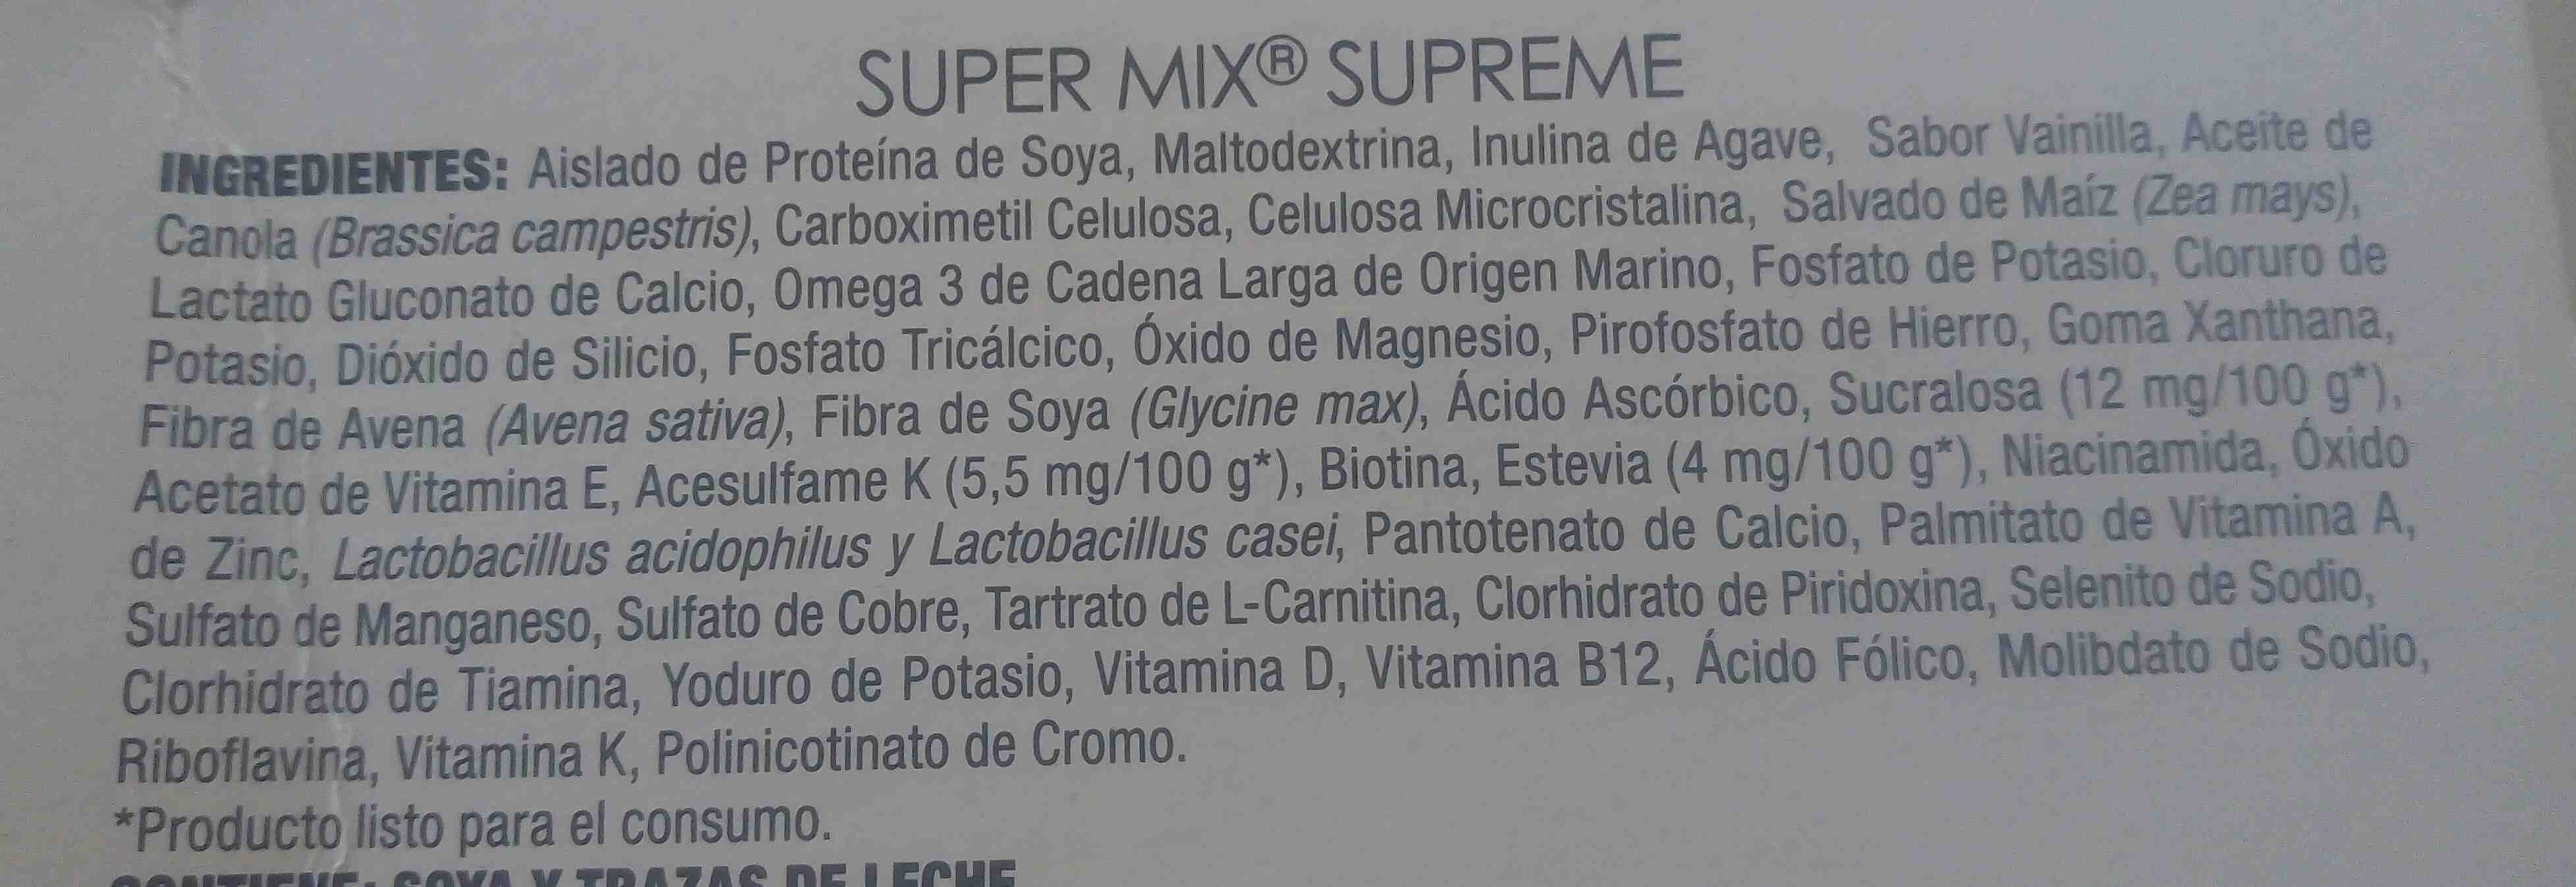 Super mix vainilla Omnilife - Ingredients